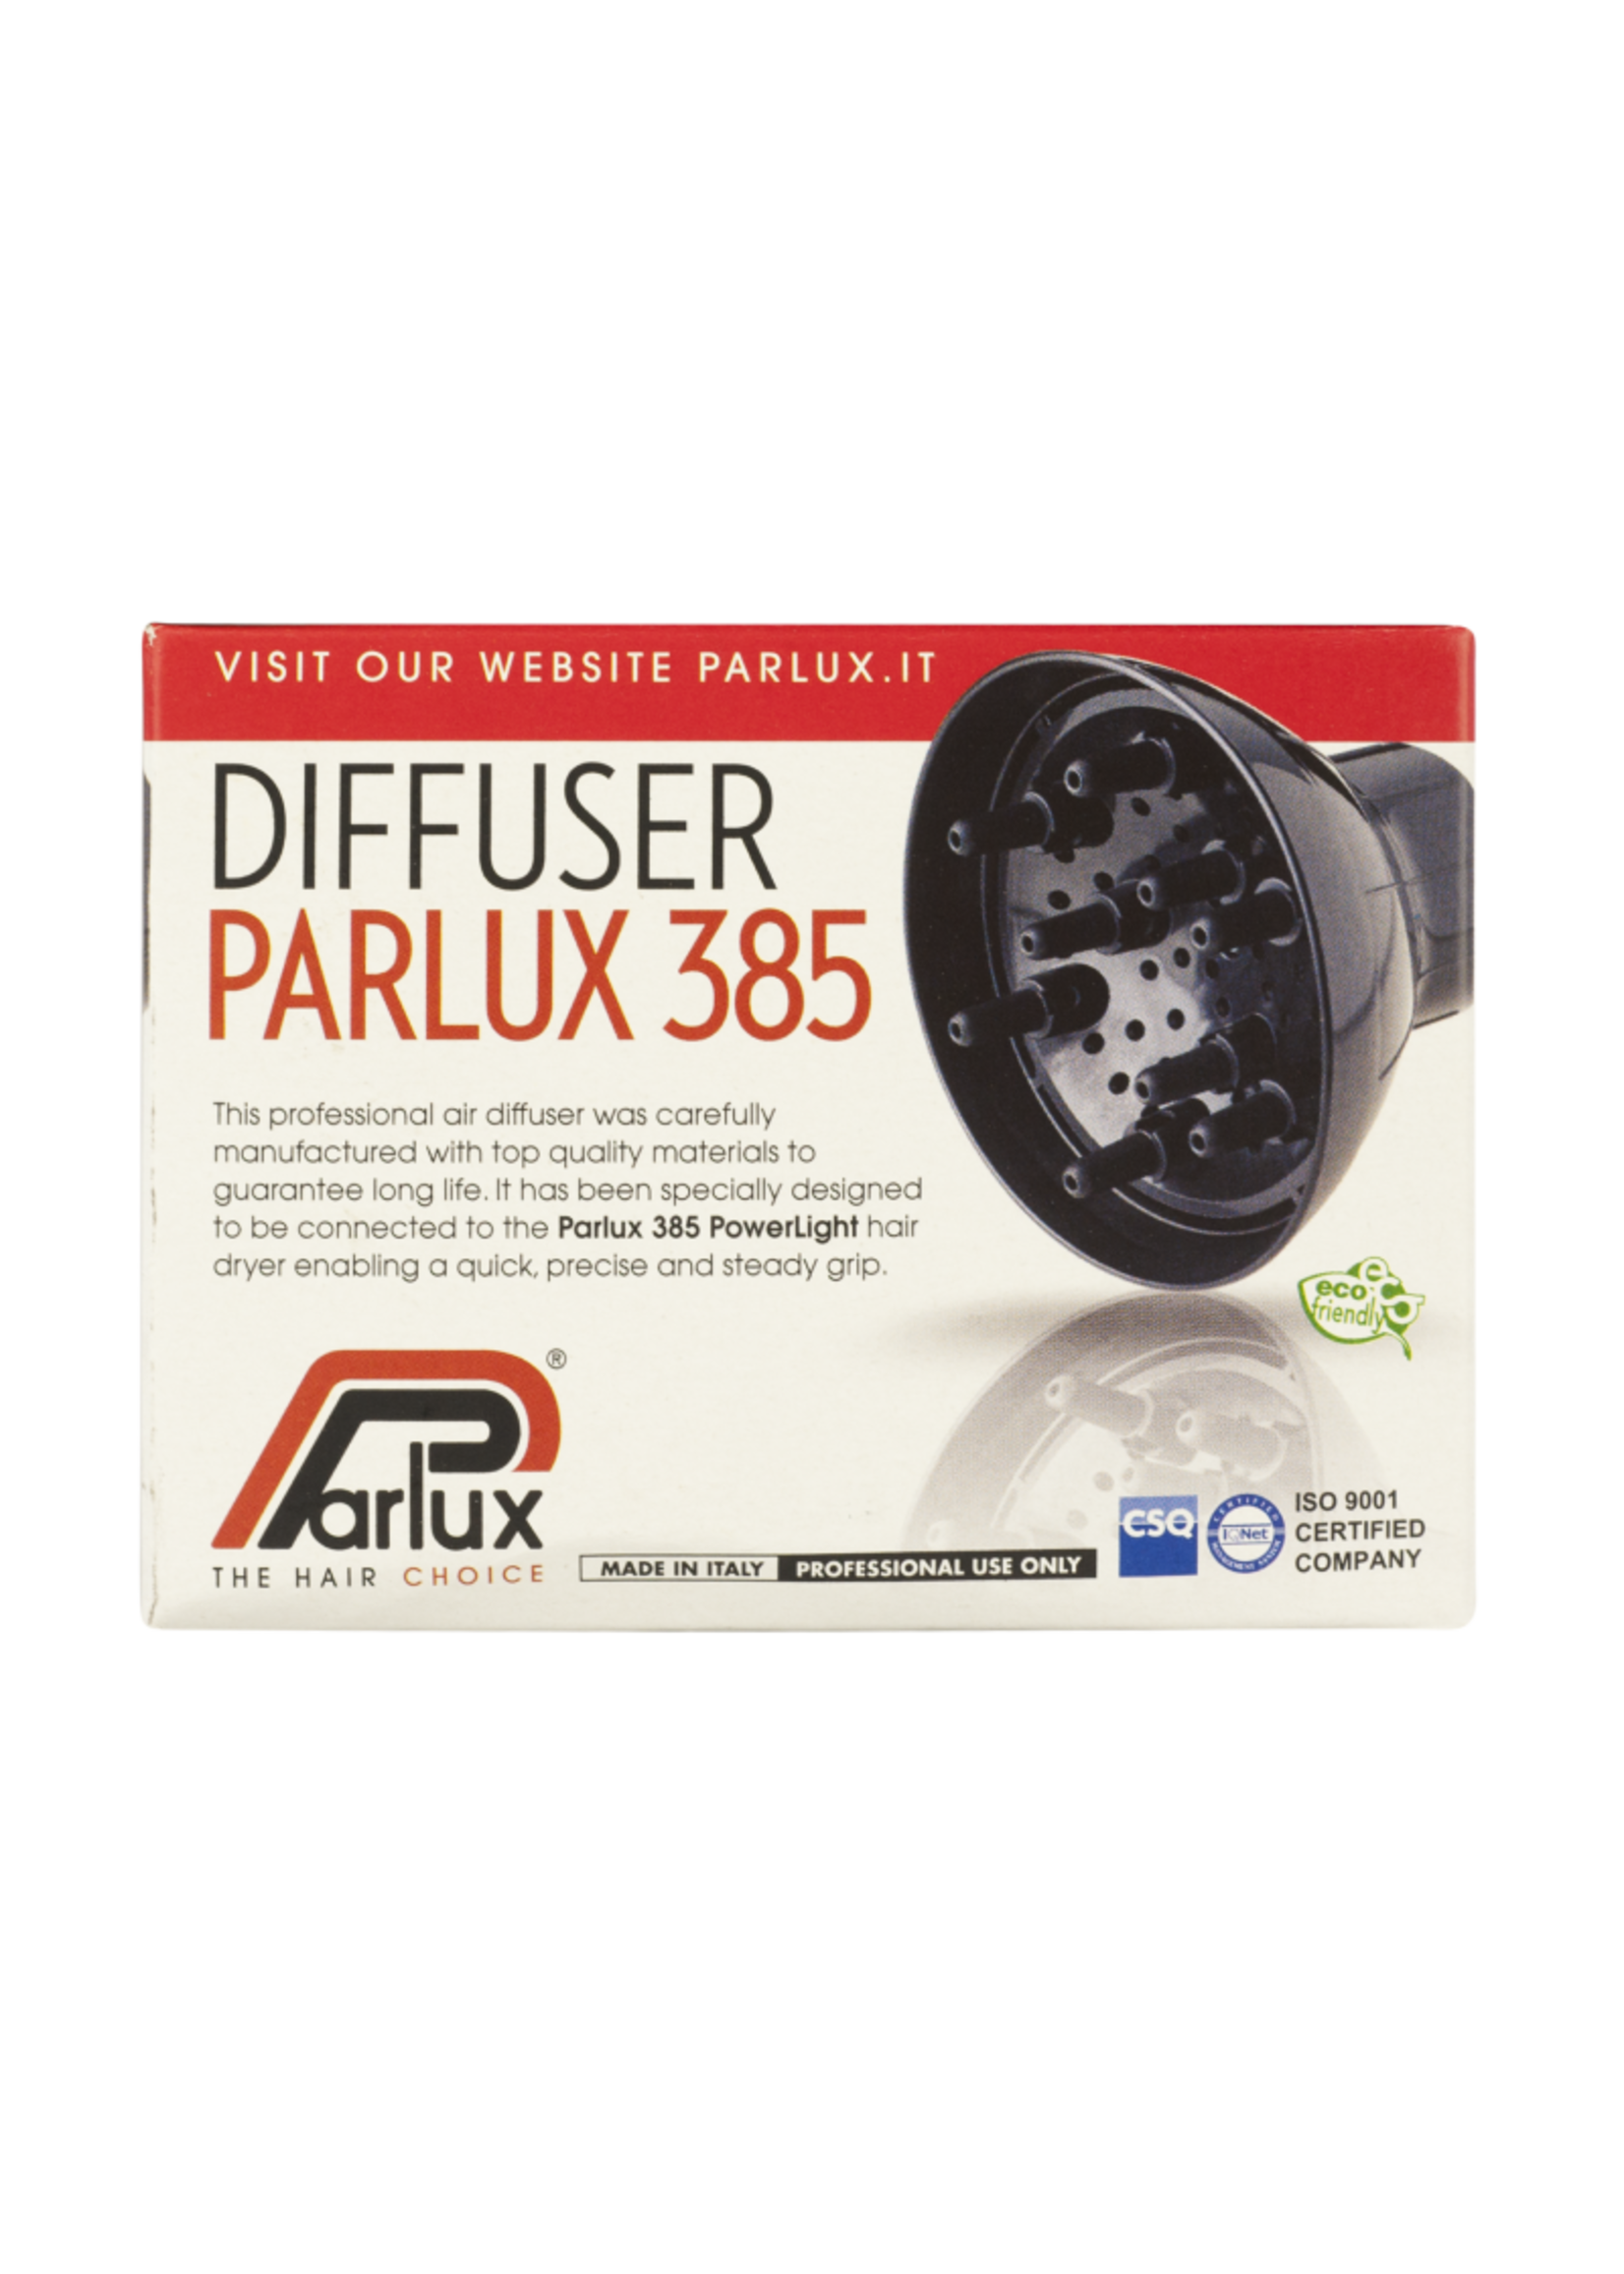 Parlux Parlux 385 Diffuser